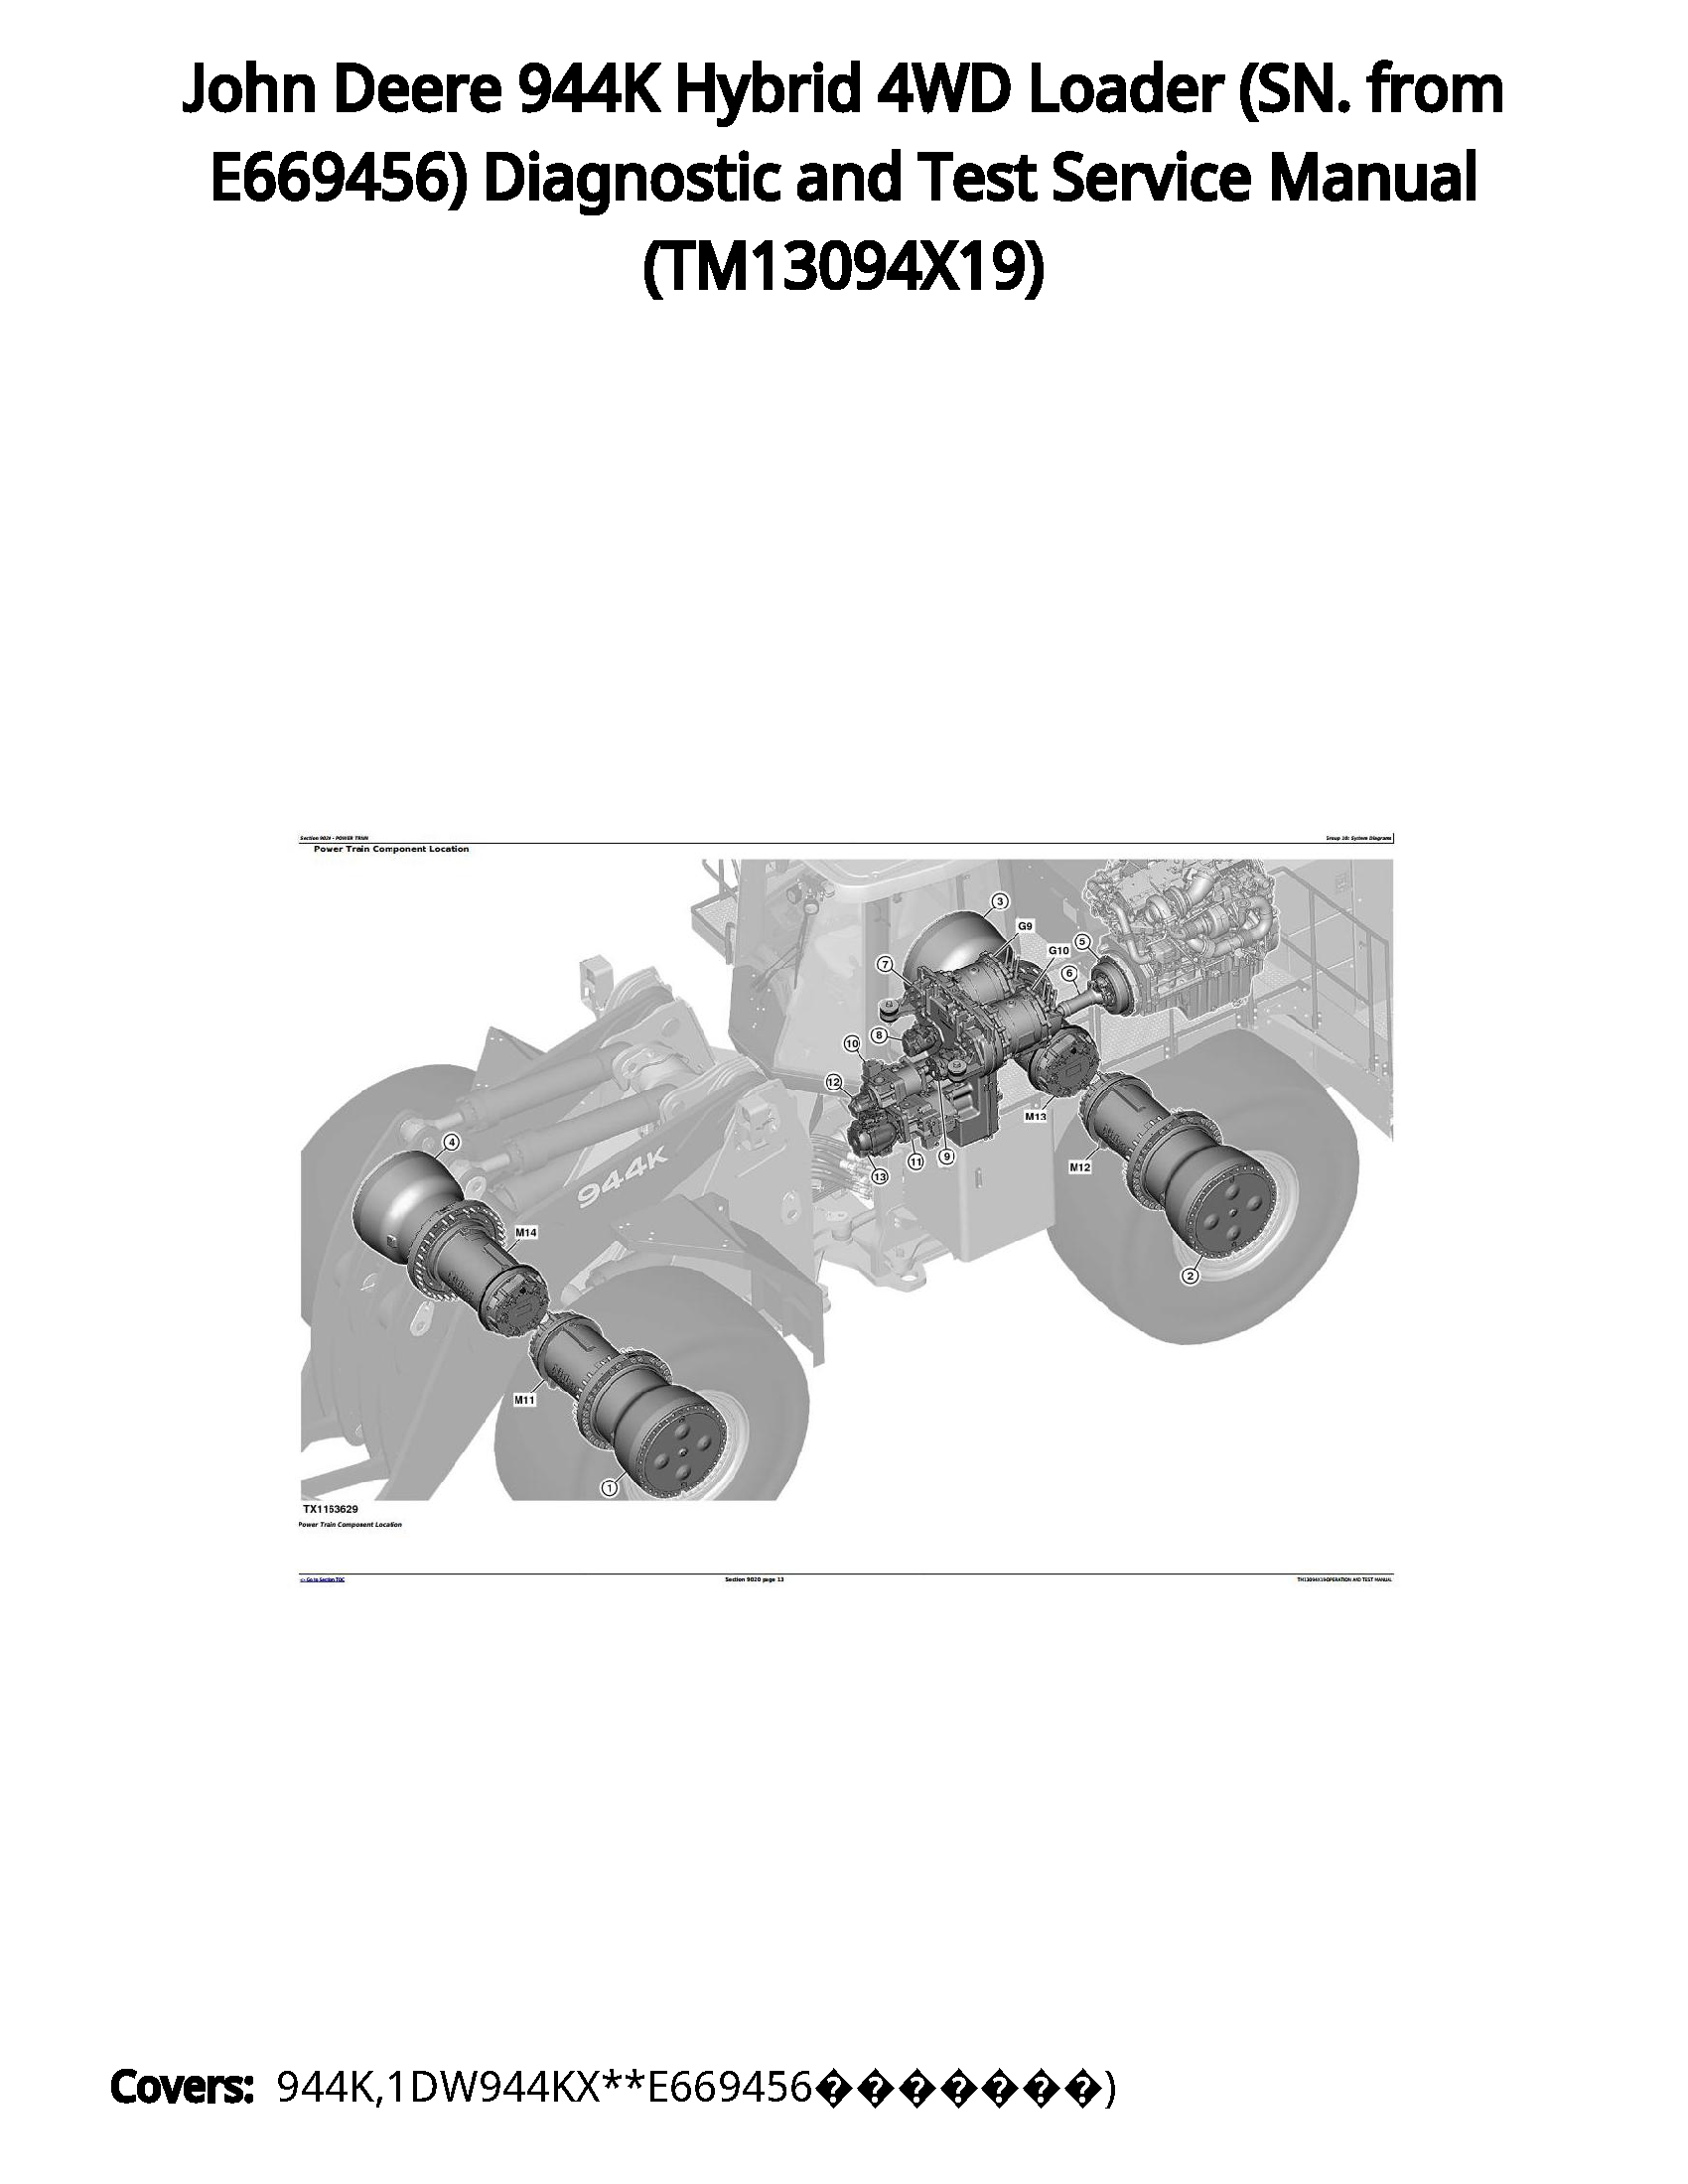 John Deere 944K Hybrid 4WD Loader (SN. from E669456) Diagnostic and Test Service Manual - TM13094X19